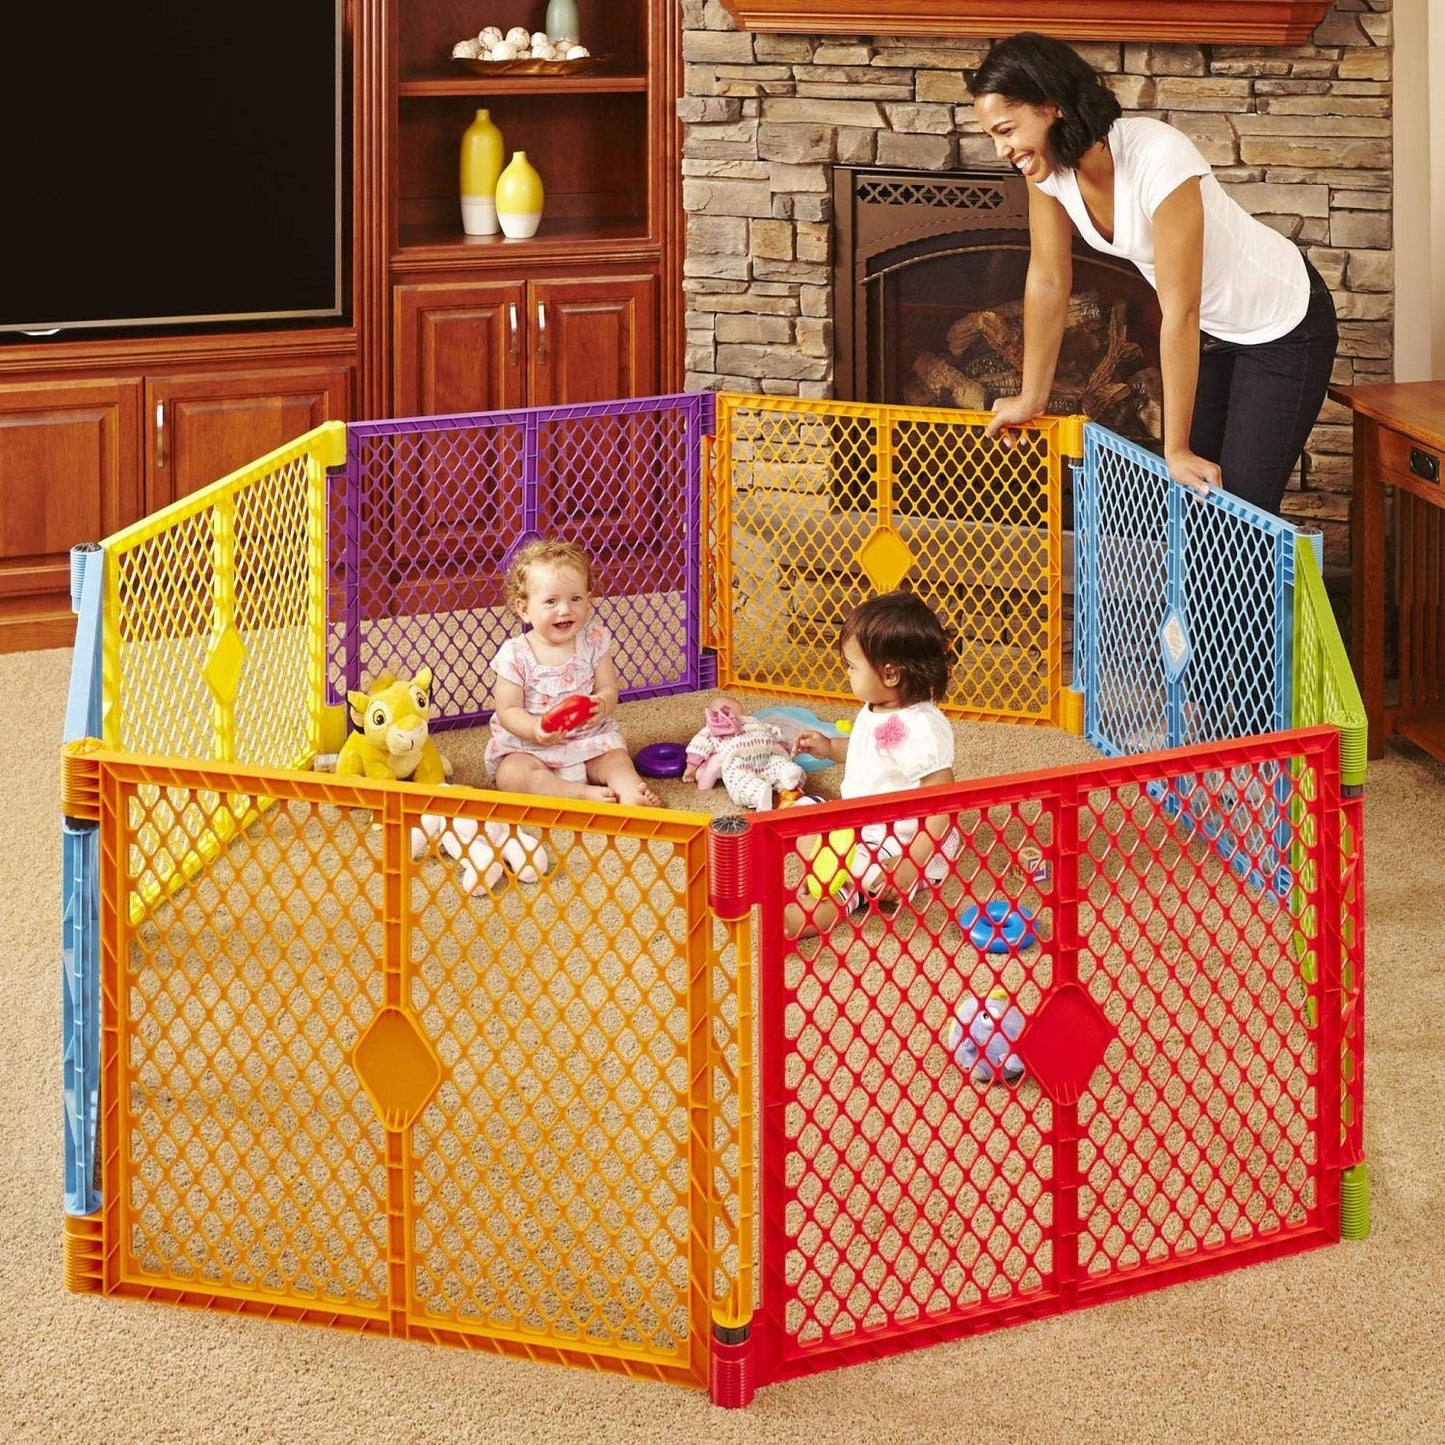 Toddleroo by North States Superyard Gray 8 Panel Baby Play Yard